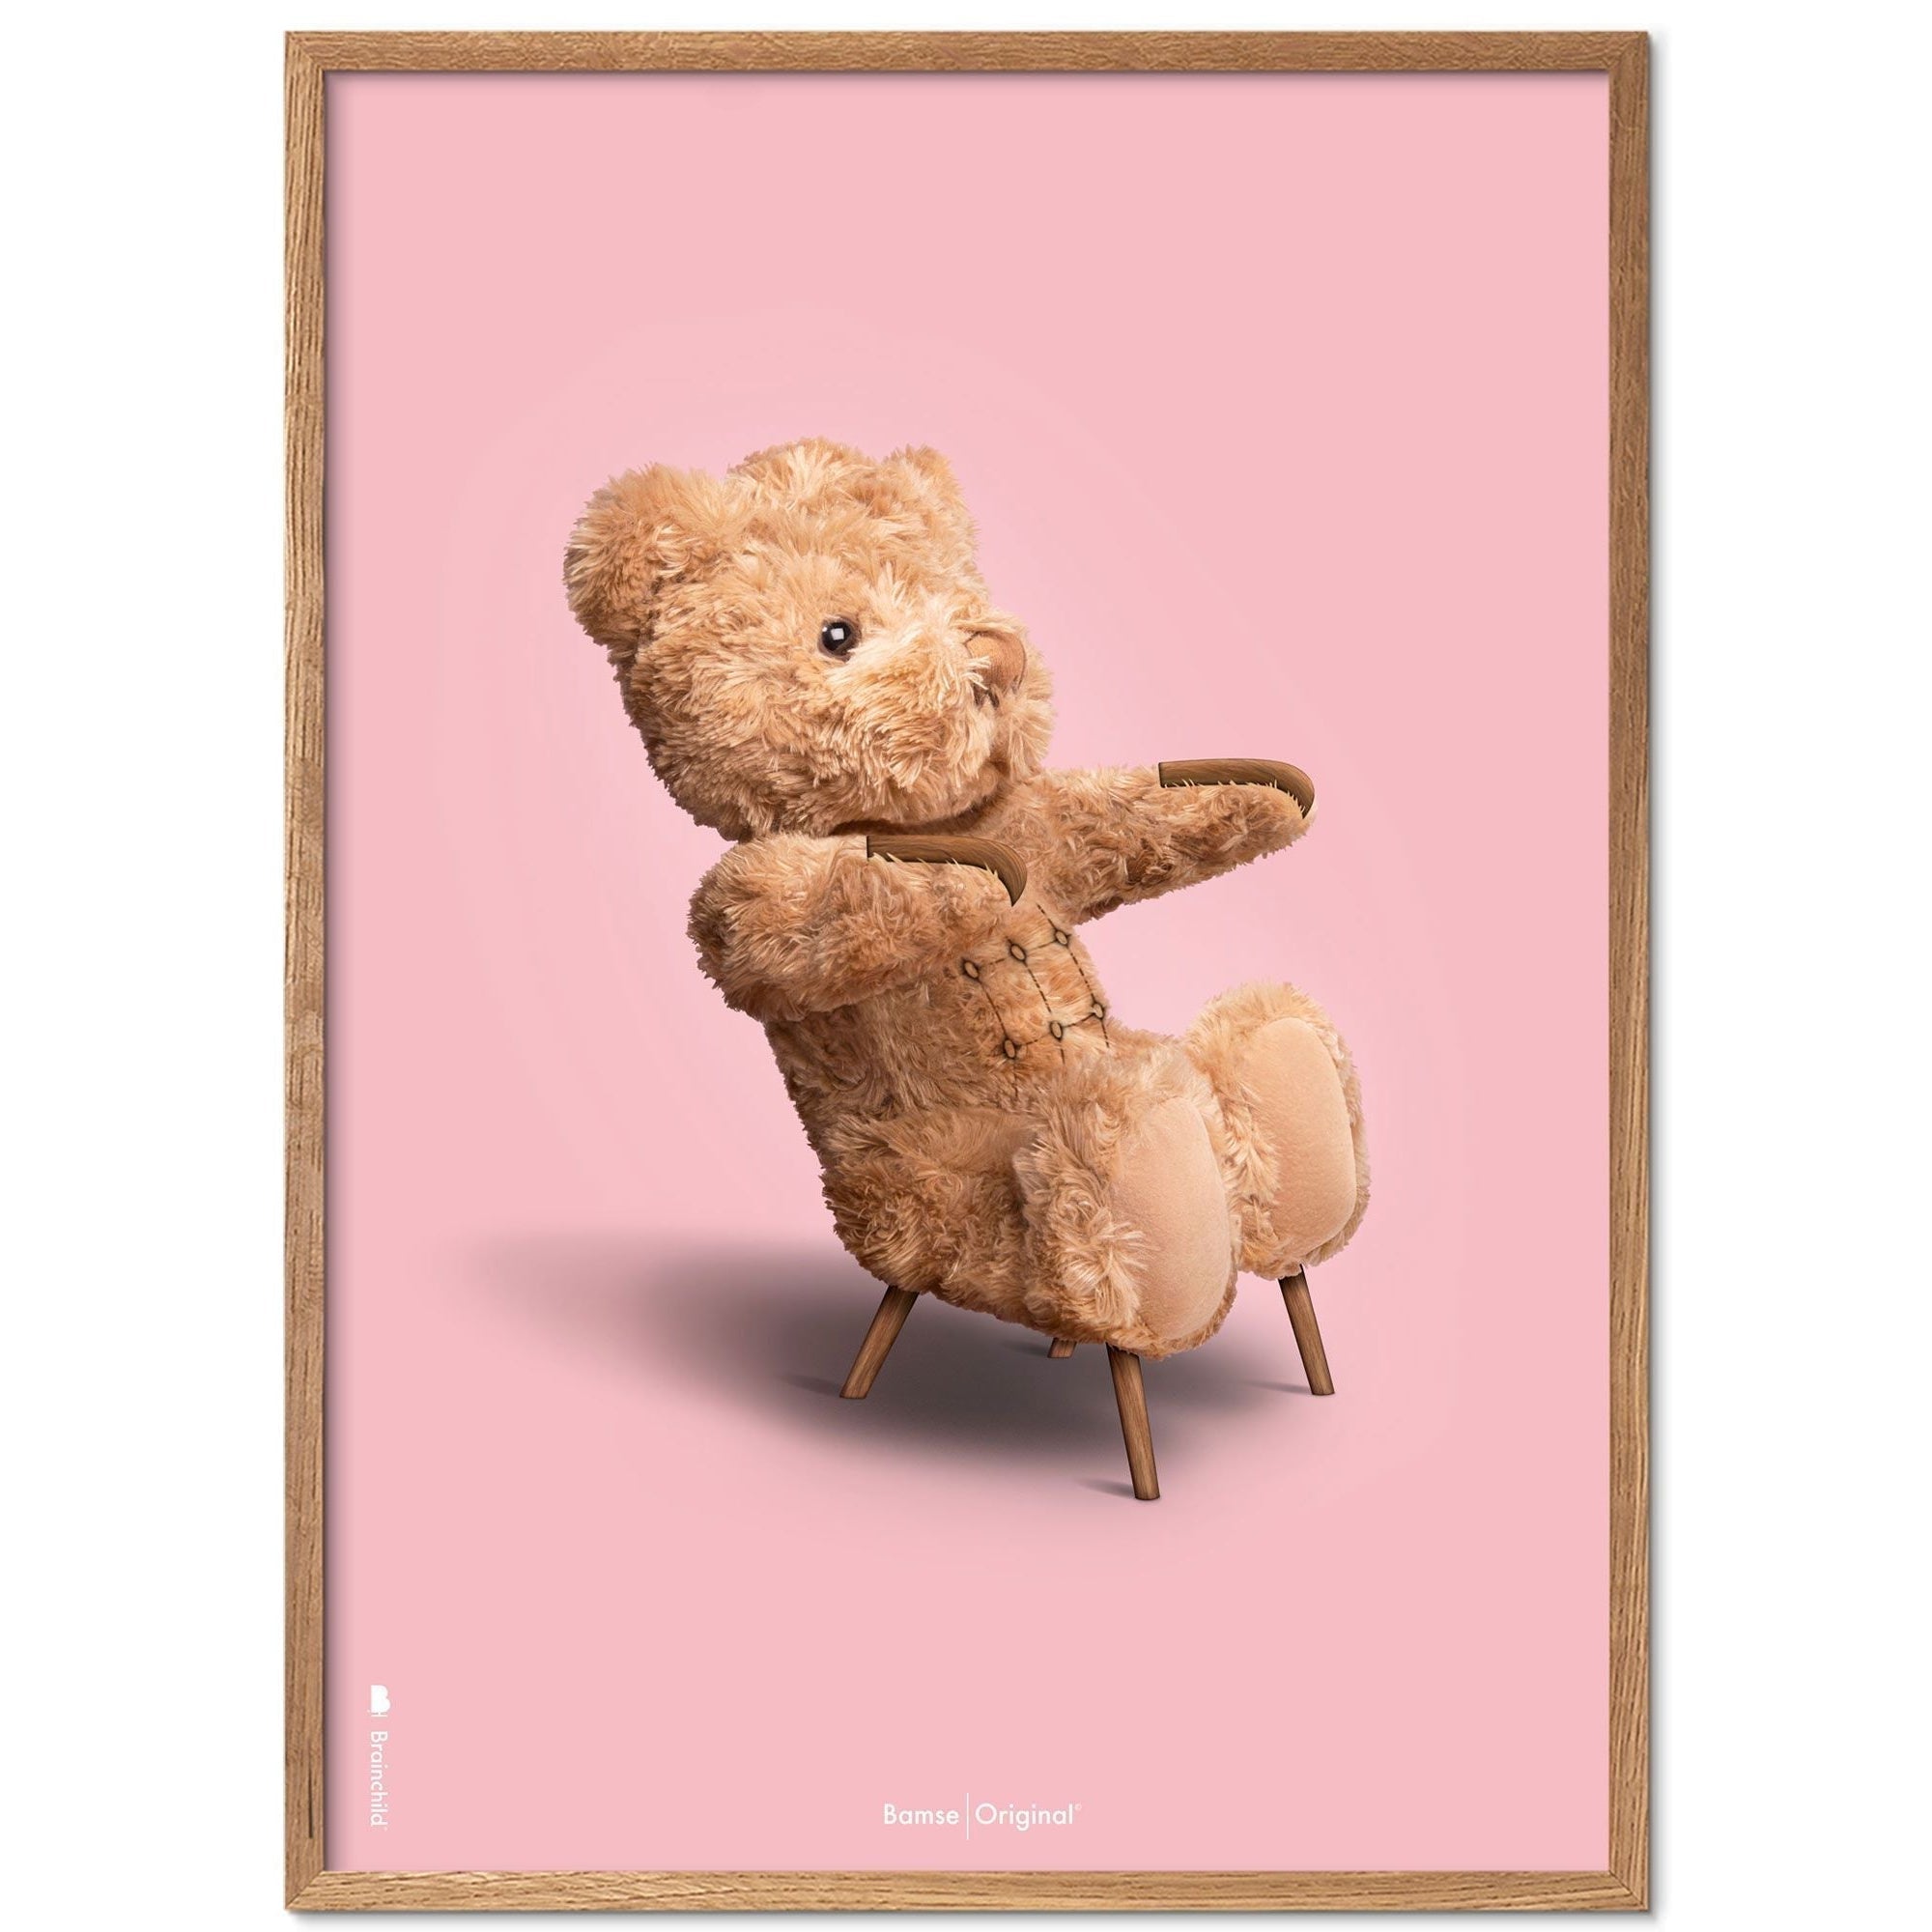 Brainchild Nallebjörn klassisk affischram i lätt träram 70x100 cm, rosa bakgrund